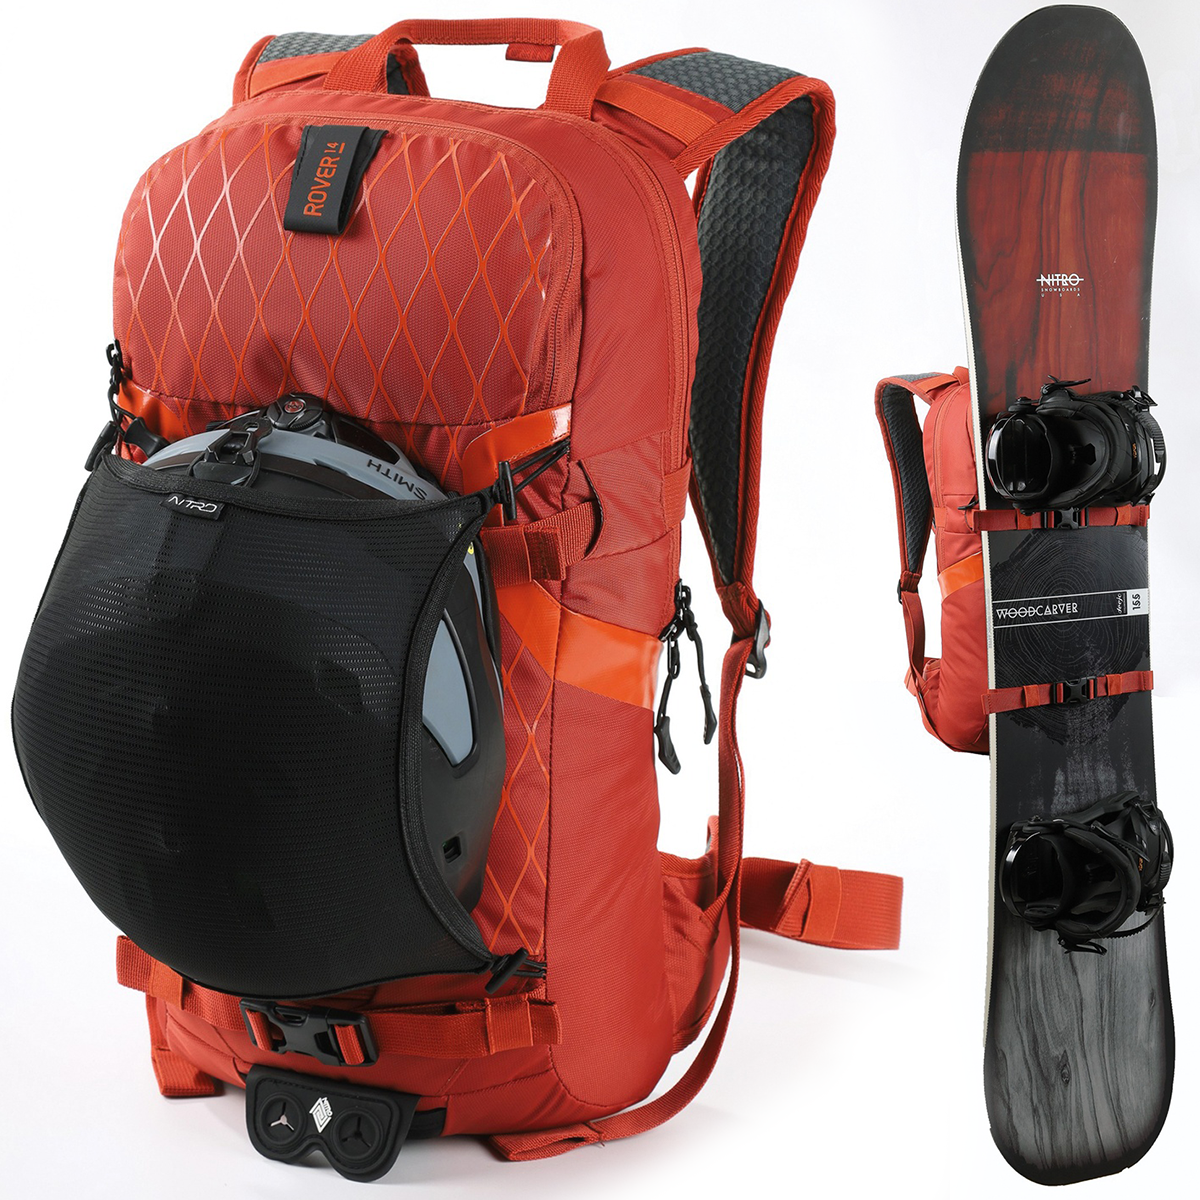 NITRO / / Rover bike \\ OTHER Supernova Snowboard backpack BACKPACKS | 14 splitboard